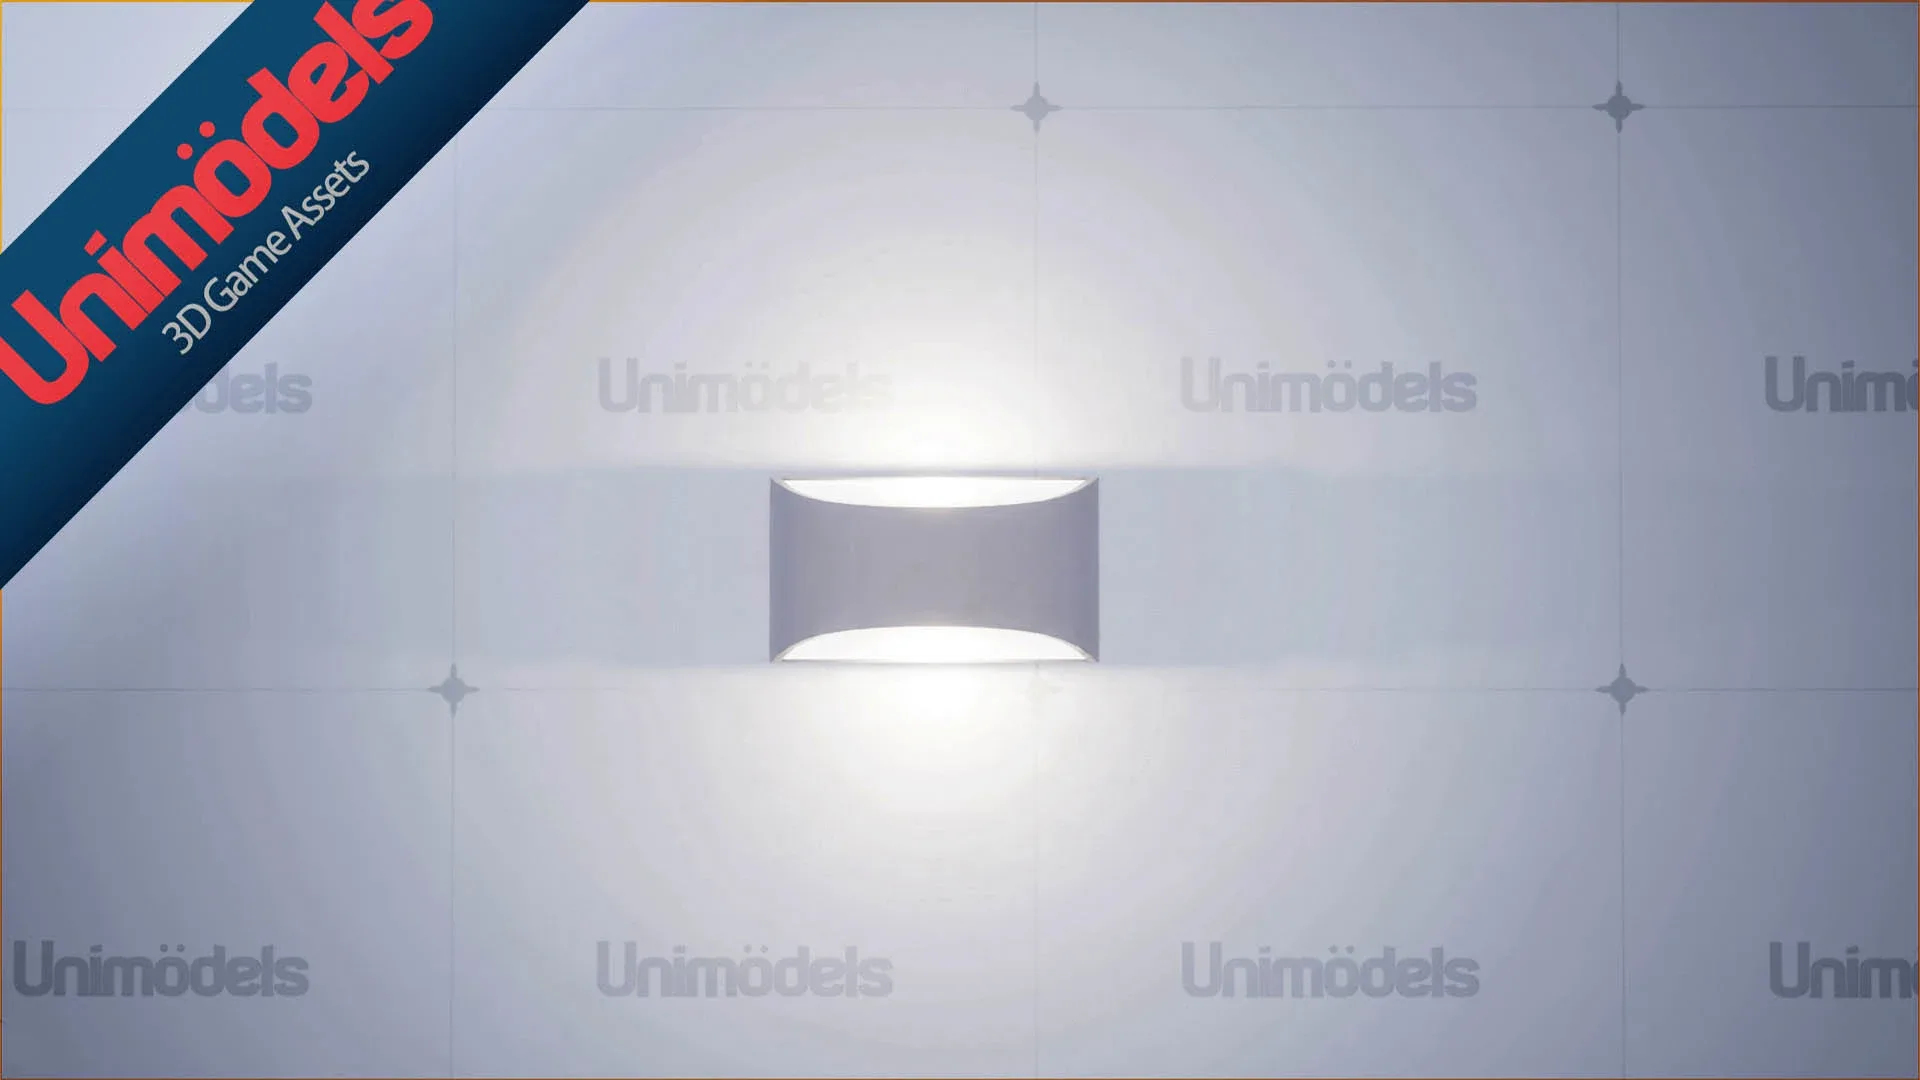 Unimodels Lamps Vol.4 for UE4